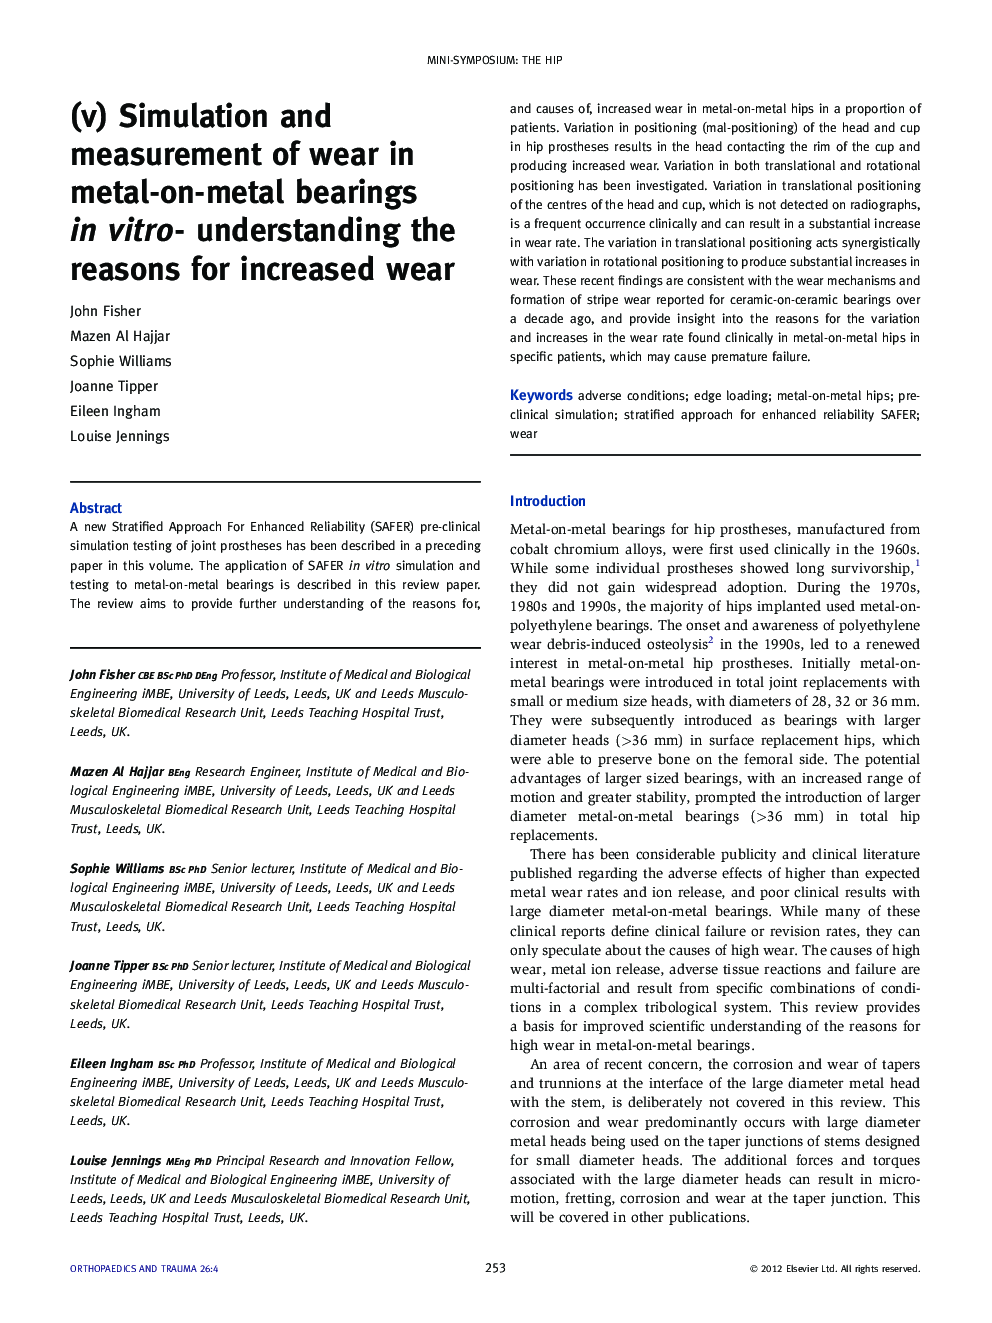 (v) Simulation and measurement of wear in metal-on-metal bearings inÂ vitro- understanding the reasons for increased wear